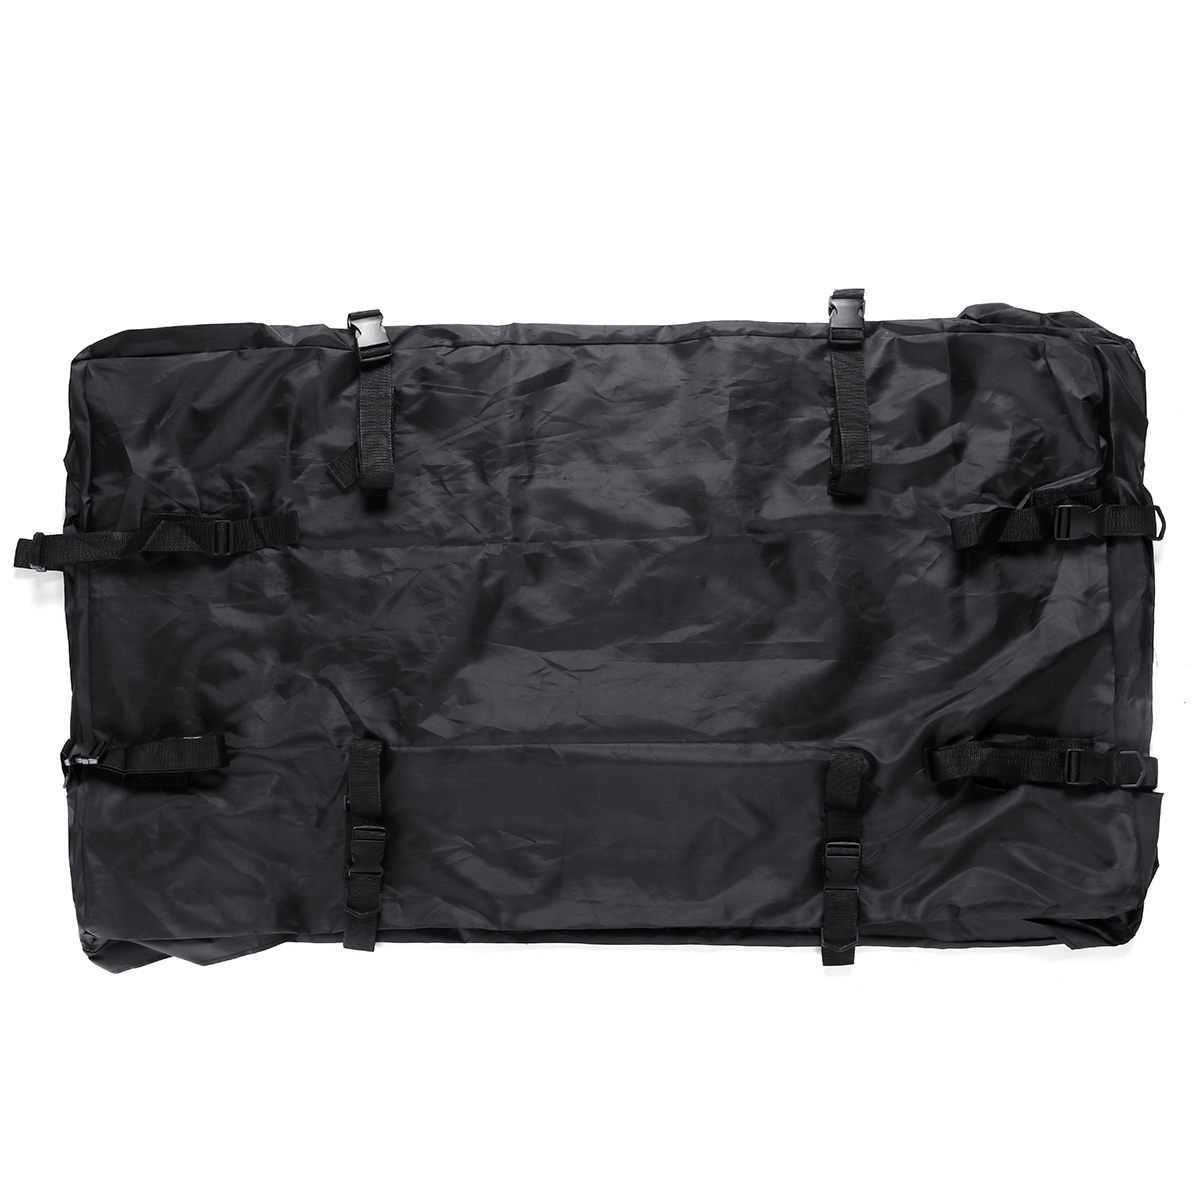 Oxford-Cloth-Car-Roof-Bag-Travel-Car-Top-Rack-Bag-Waterproof-Luggage-Cargo-Carrier-Bag-Outdoor-Campi-1762473-5